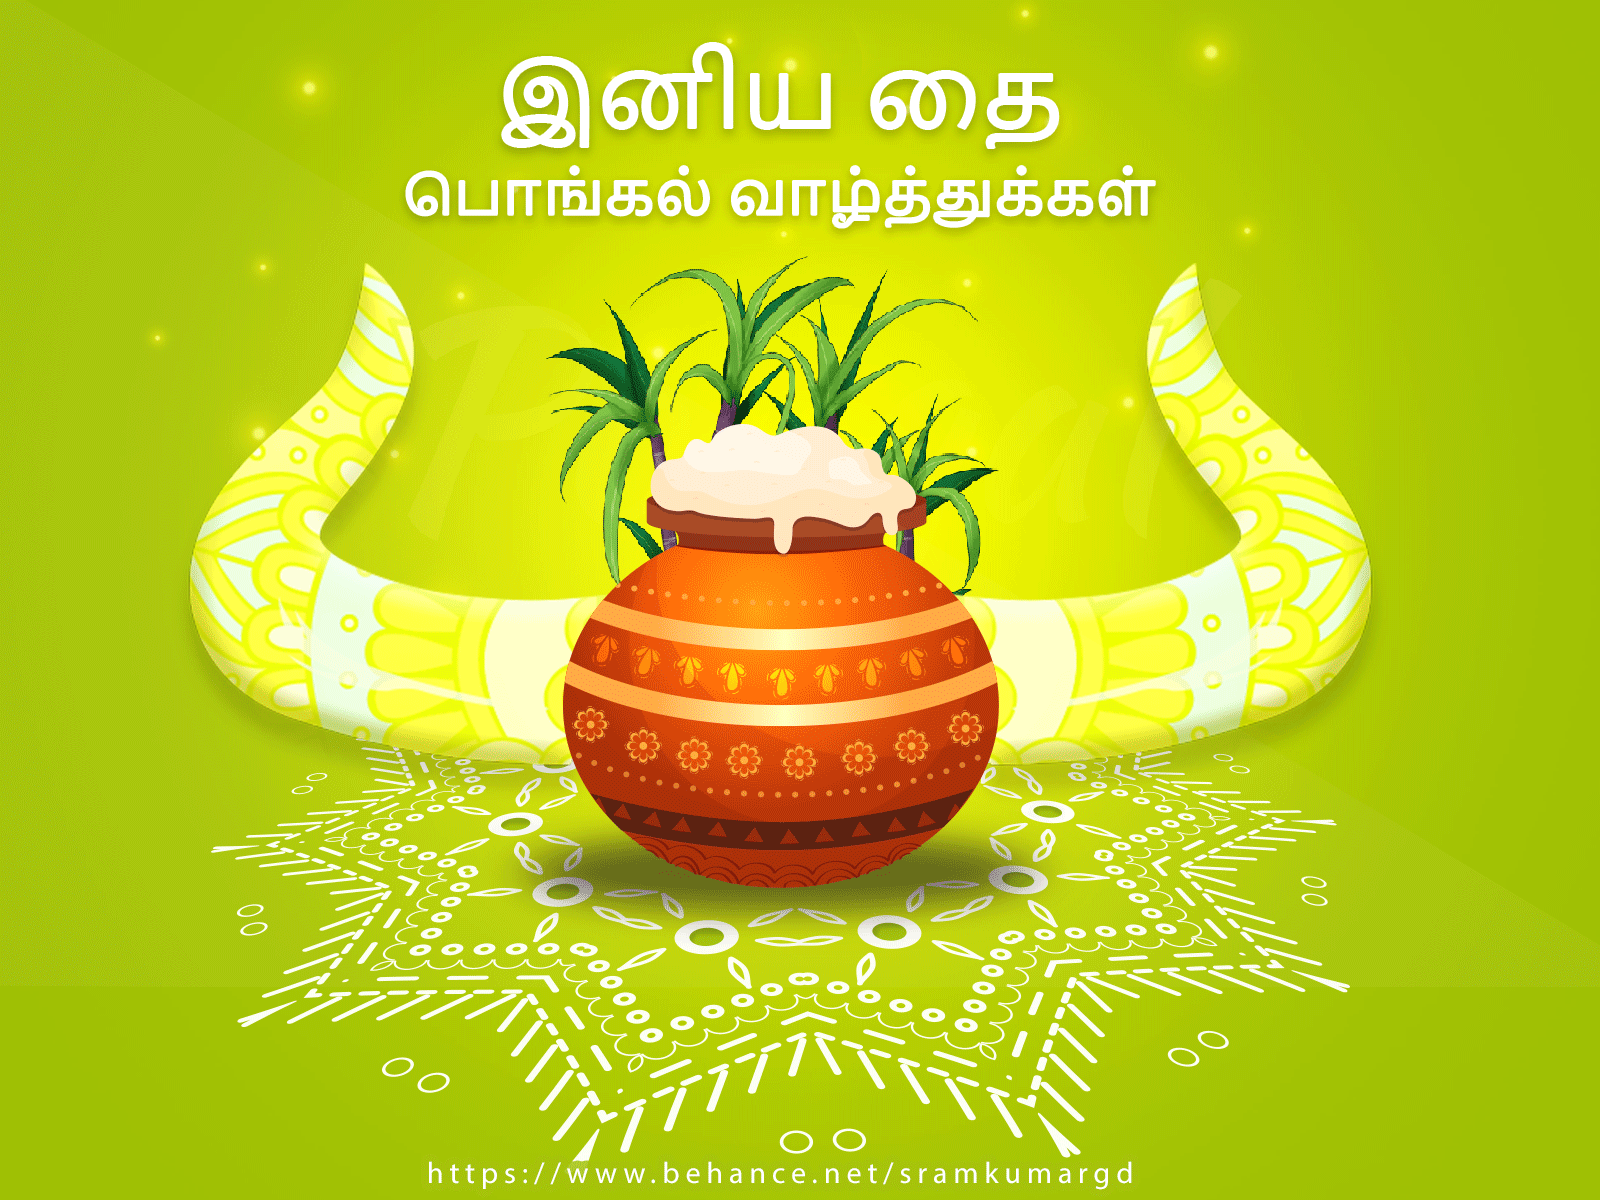 Wish You Happy Pongal | இனிய தை பொங்கல் வாழ்த்துக்கள் 2021 happy tamil new year wish wishes இனிய தை பொங்கல் வாழ்த்துக்கள்